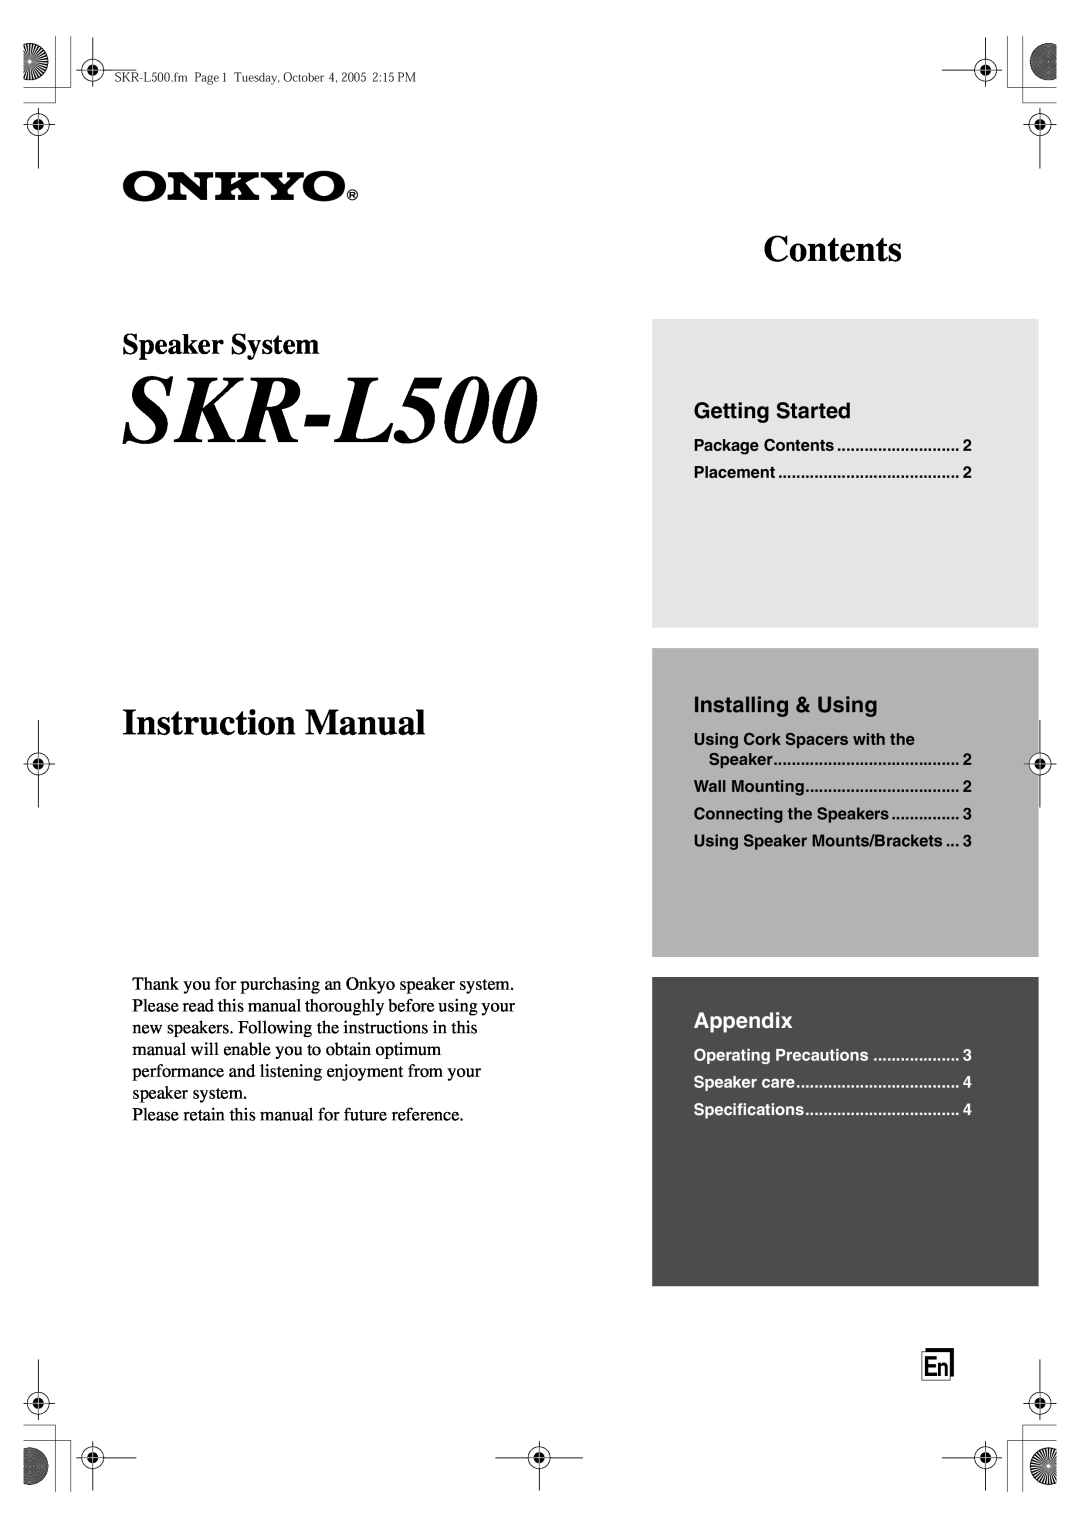 Onkyo SKR-L500 instruction manual Contents, Speaker System, Getting Started, Installing & Using, Appendix 